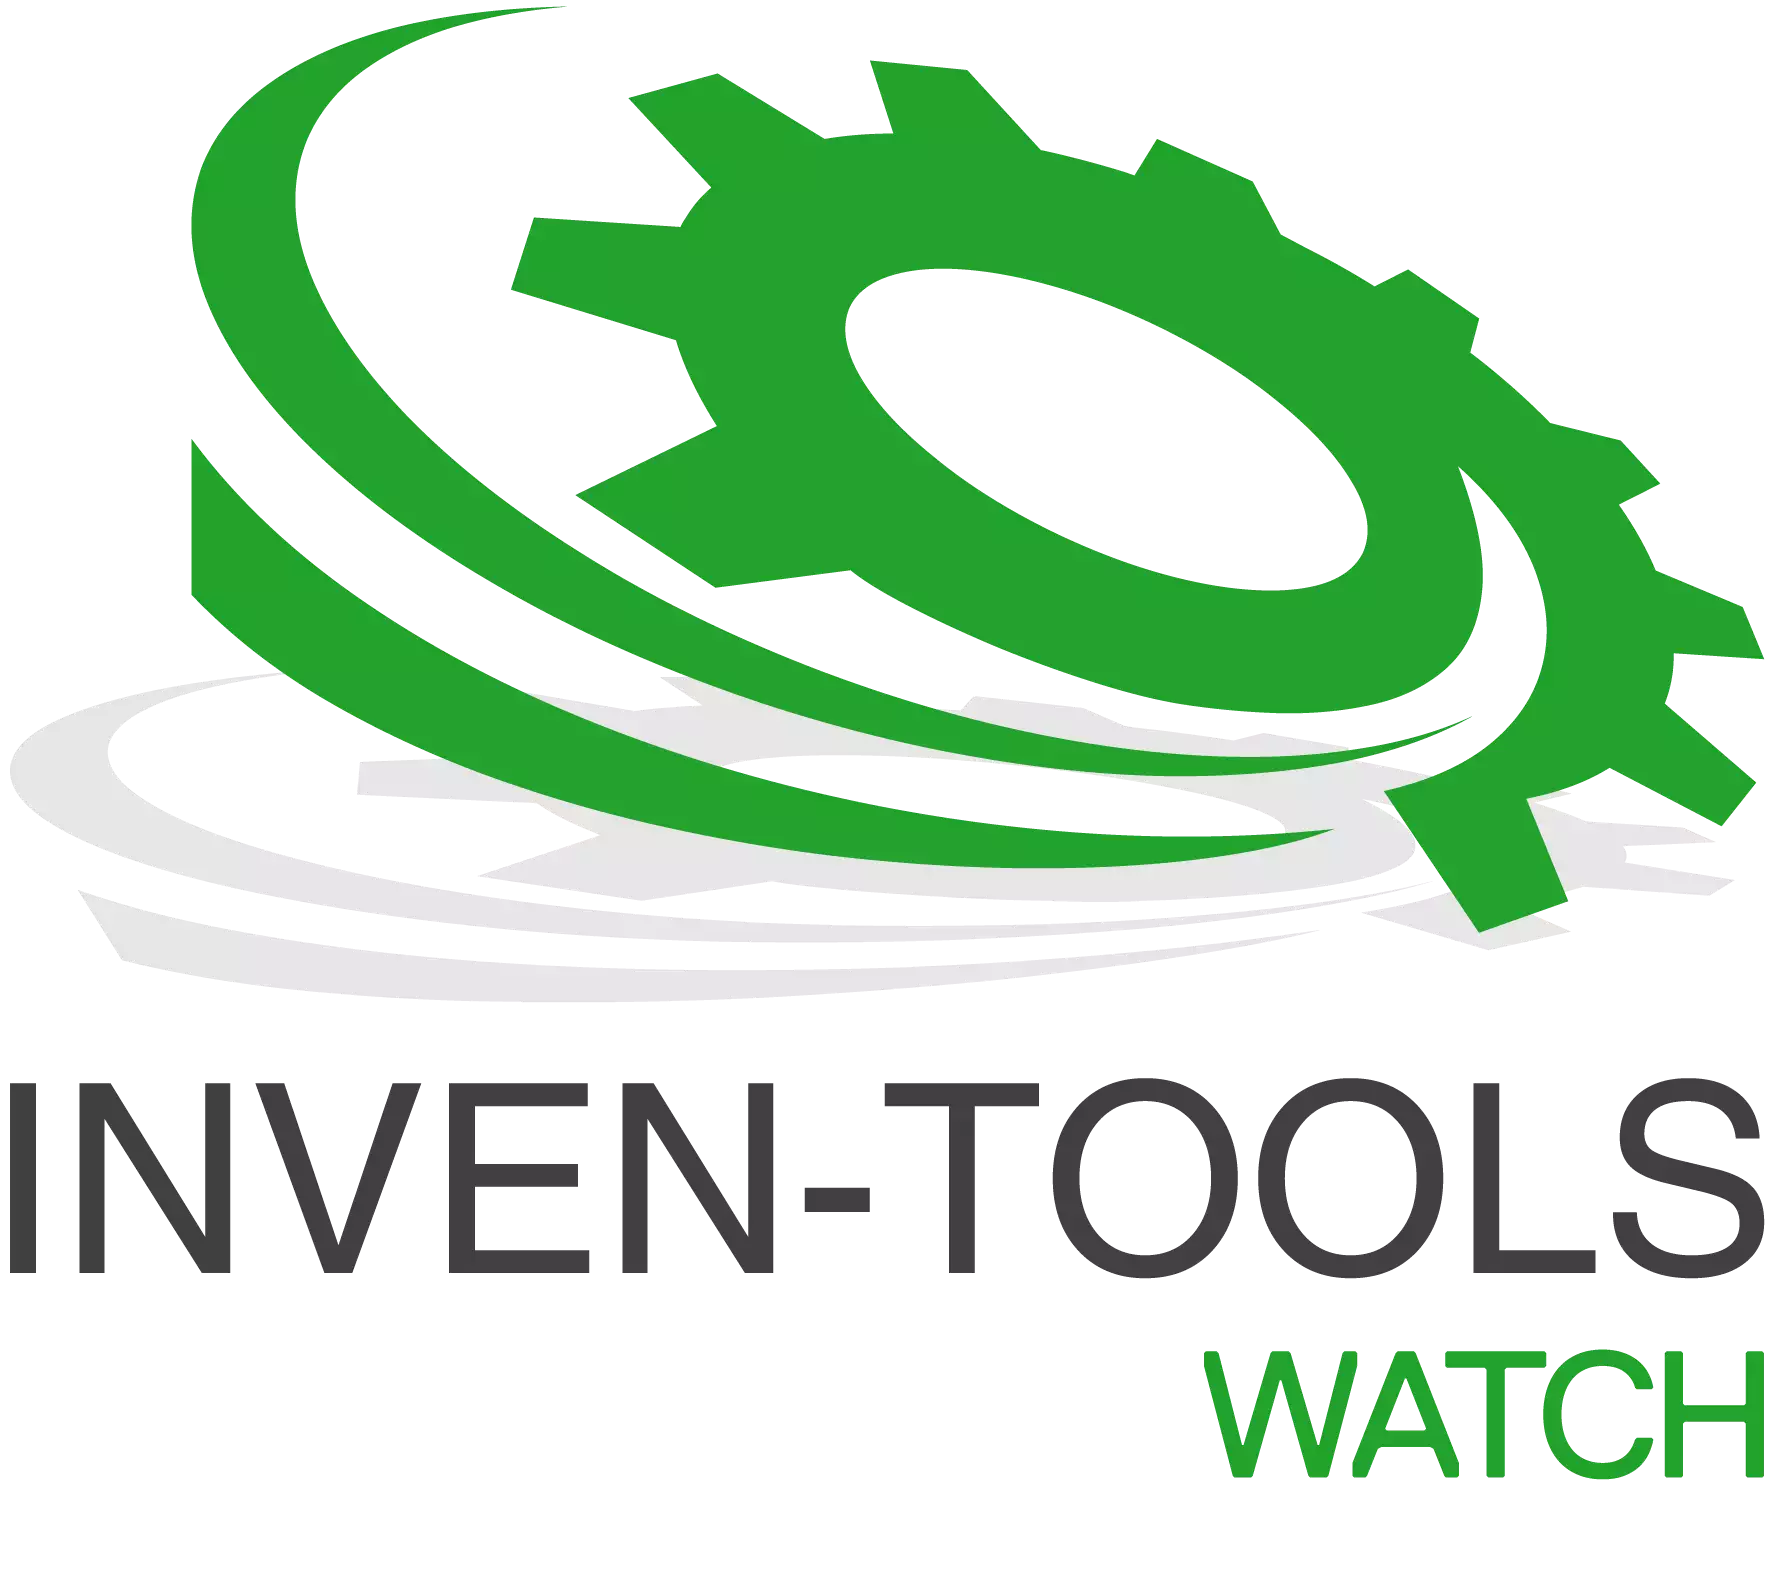 Inven-Tools Watch